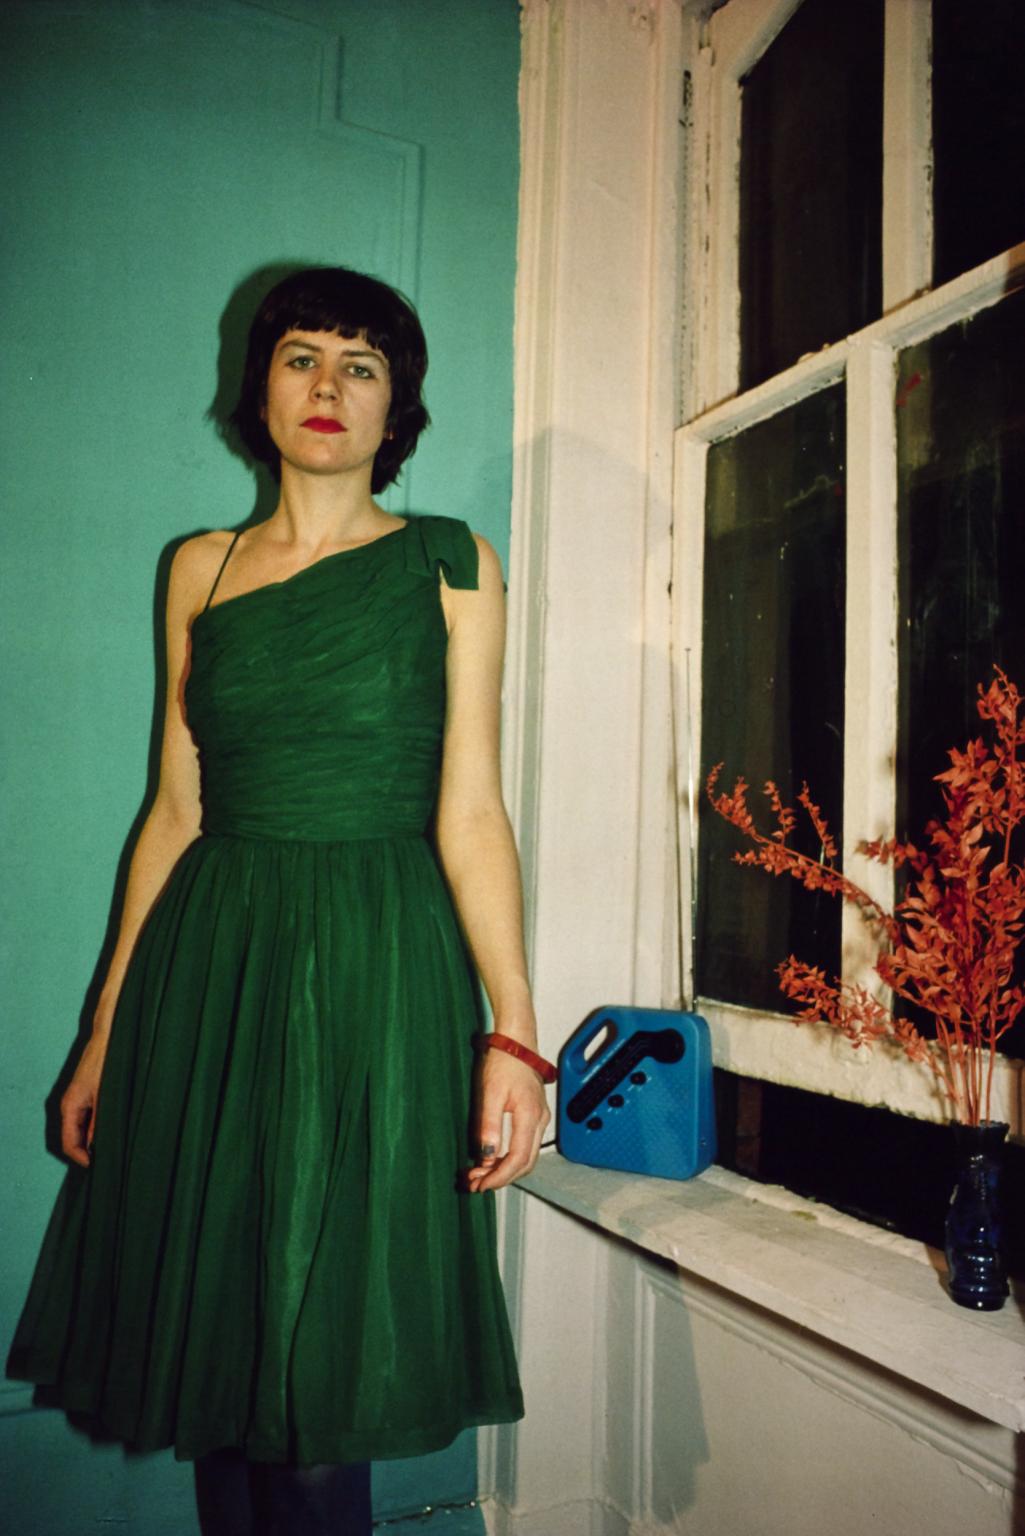 Vivienne in the green dress, NYC 1980. © Nan Goldin